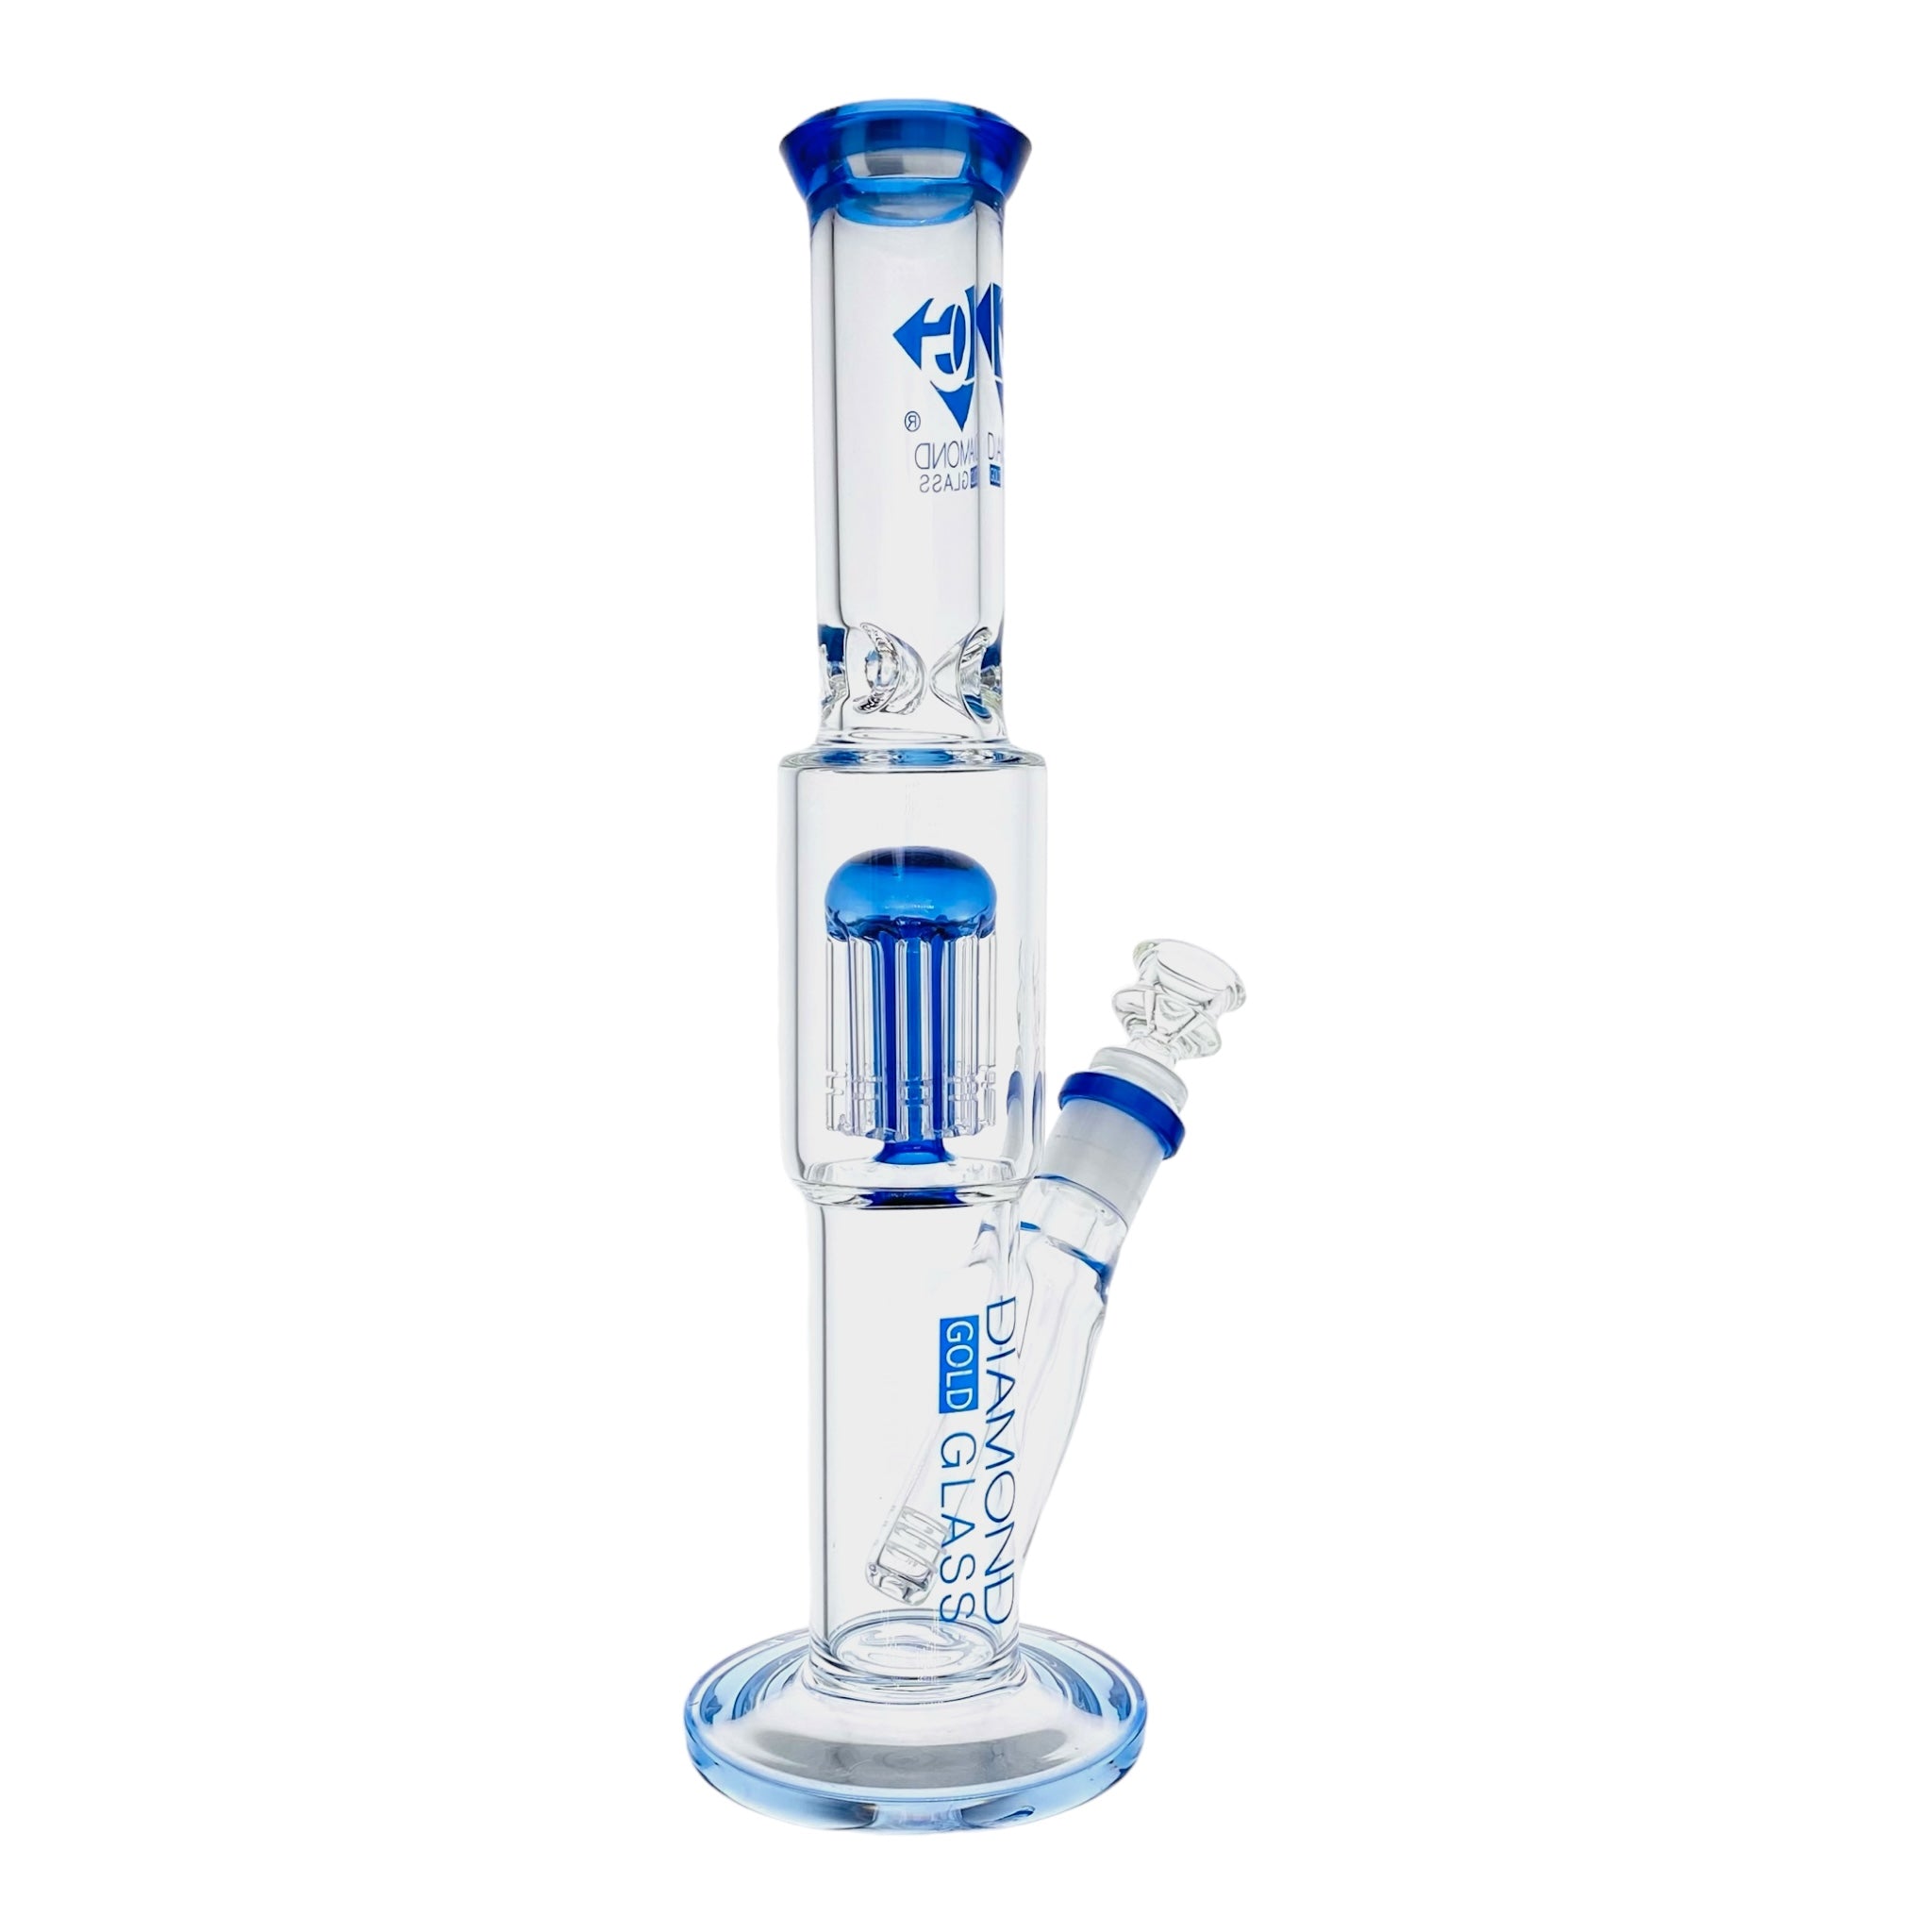 Diamond Glass Bong - Blue 12 Inch Straight Tube Bong With Tree Perc